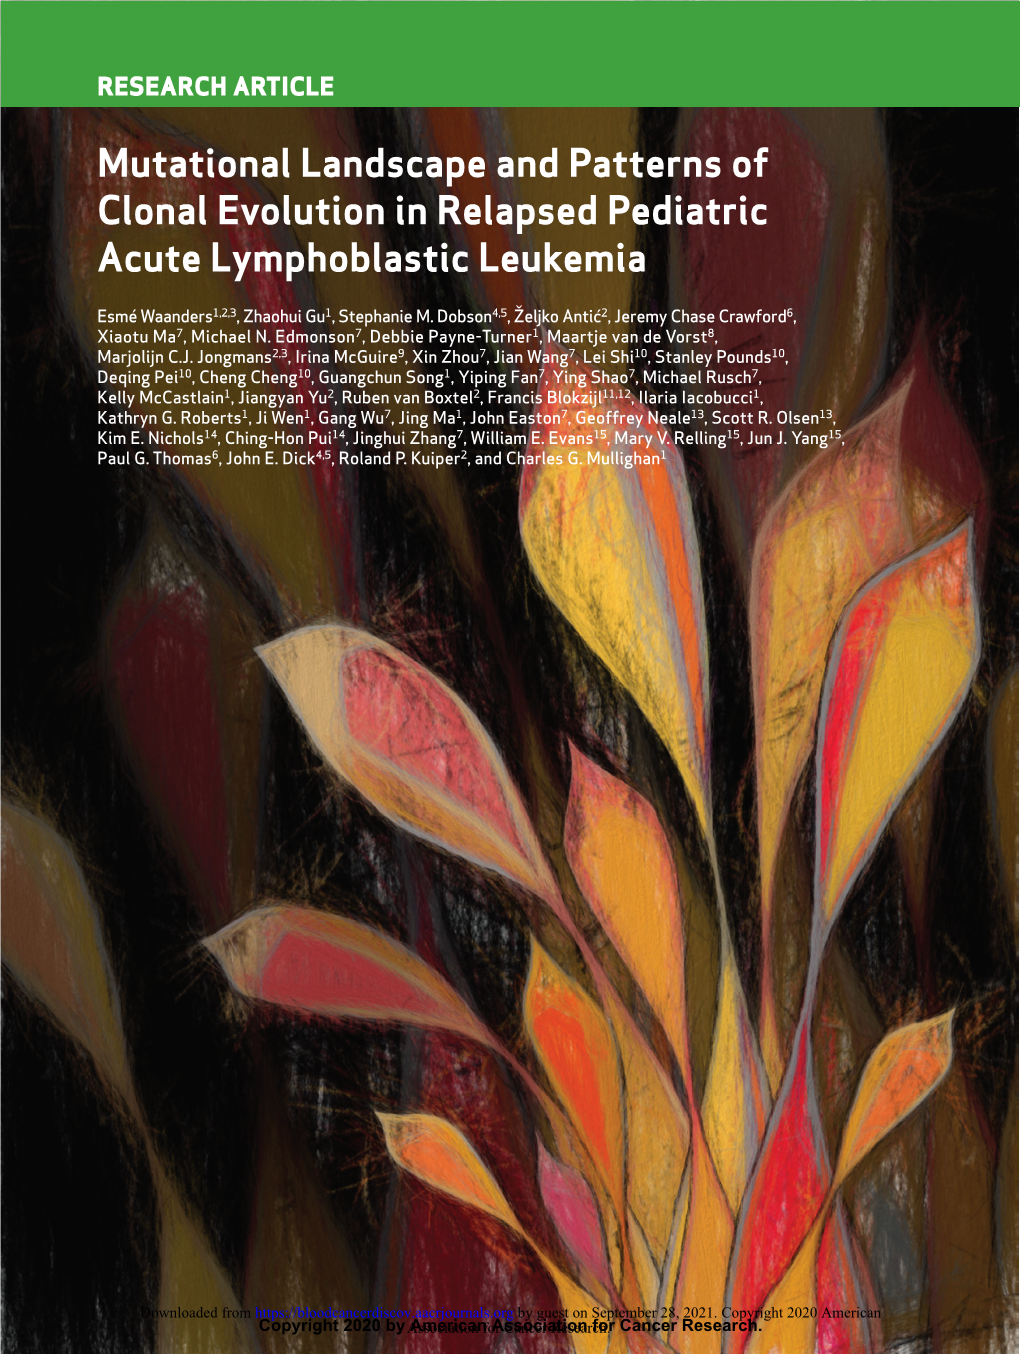 Mutational Landscape and Patterns of Clonal Evolution in Relapsed Pediatric Acute Lymphoblastic Leukemia